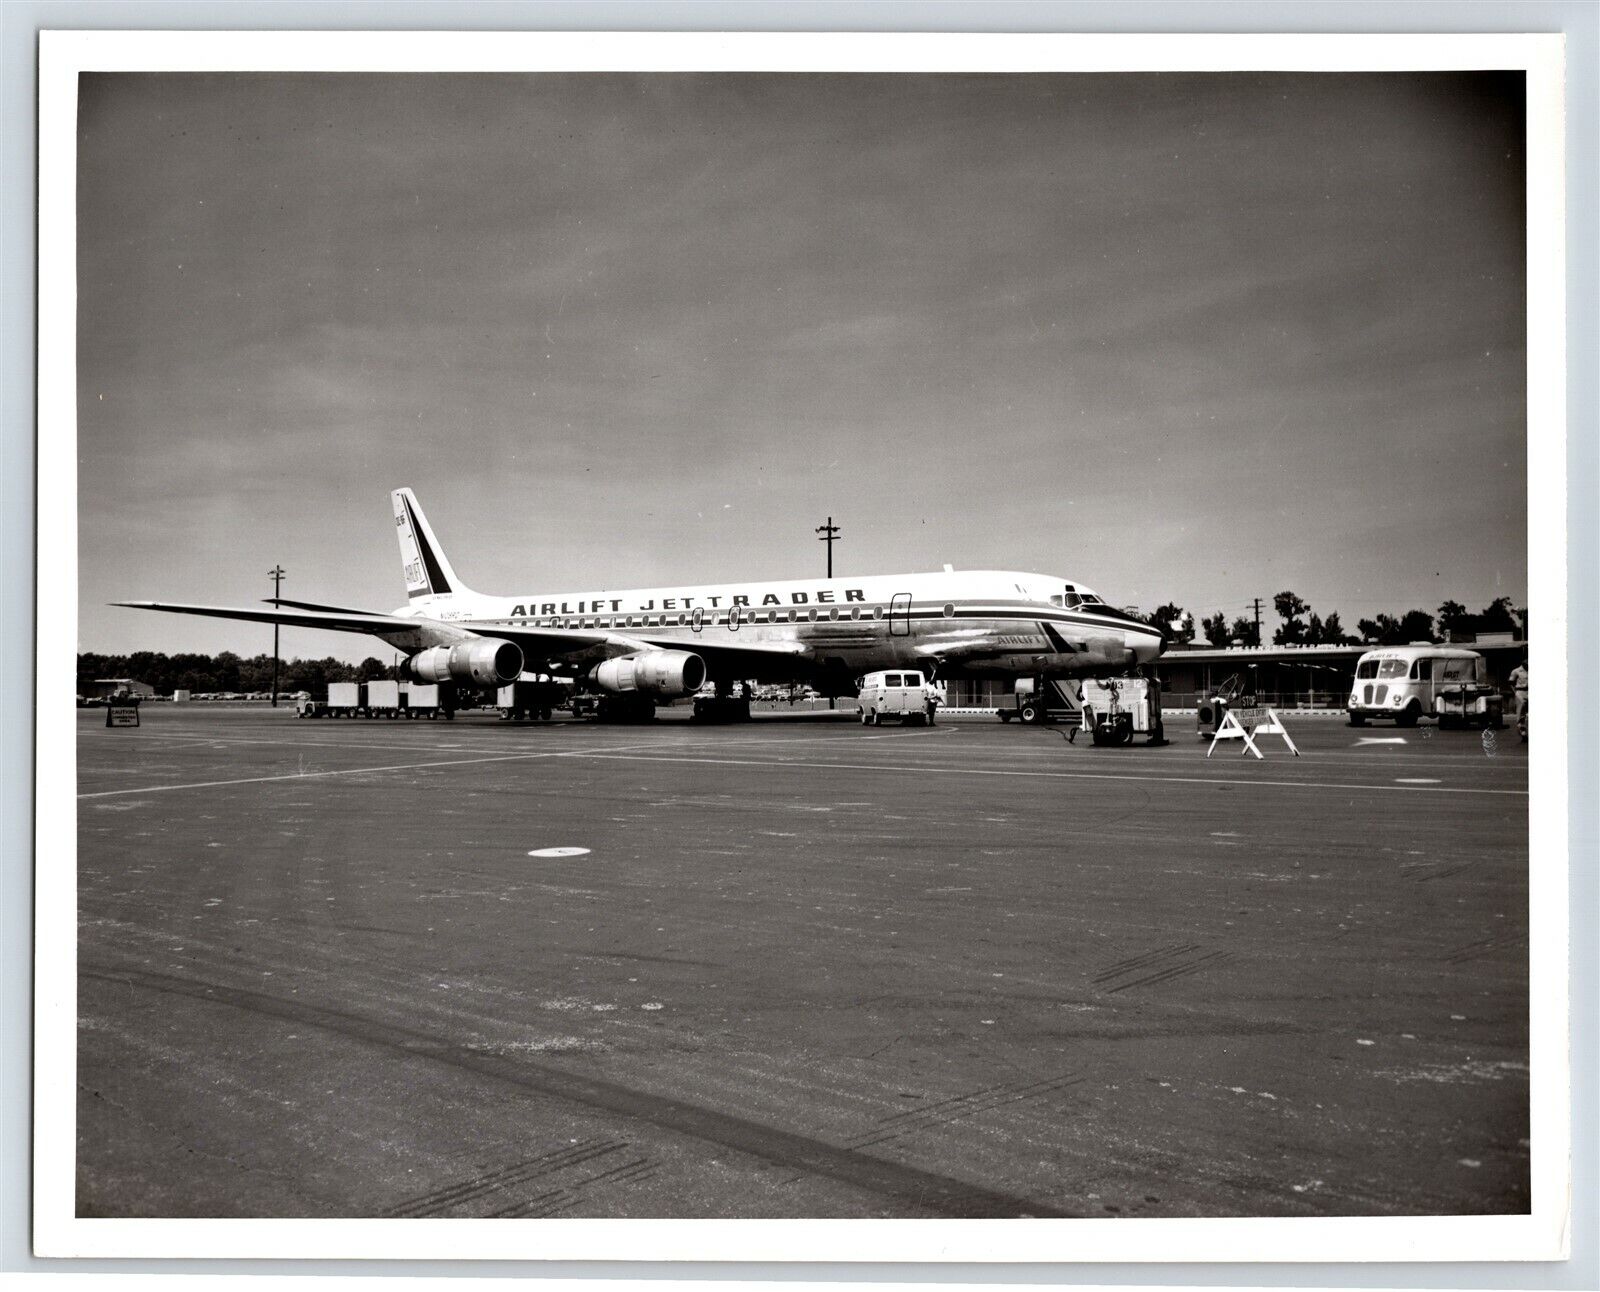 Aviation Airplane Airlift Jet Trader US Mail DC-8F 8x10 B&W Photo C5